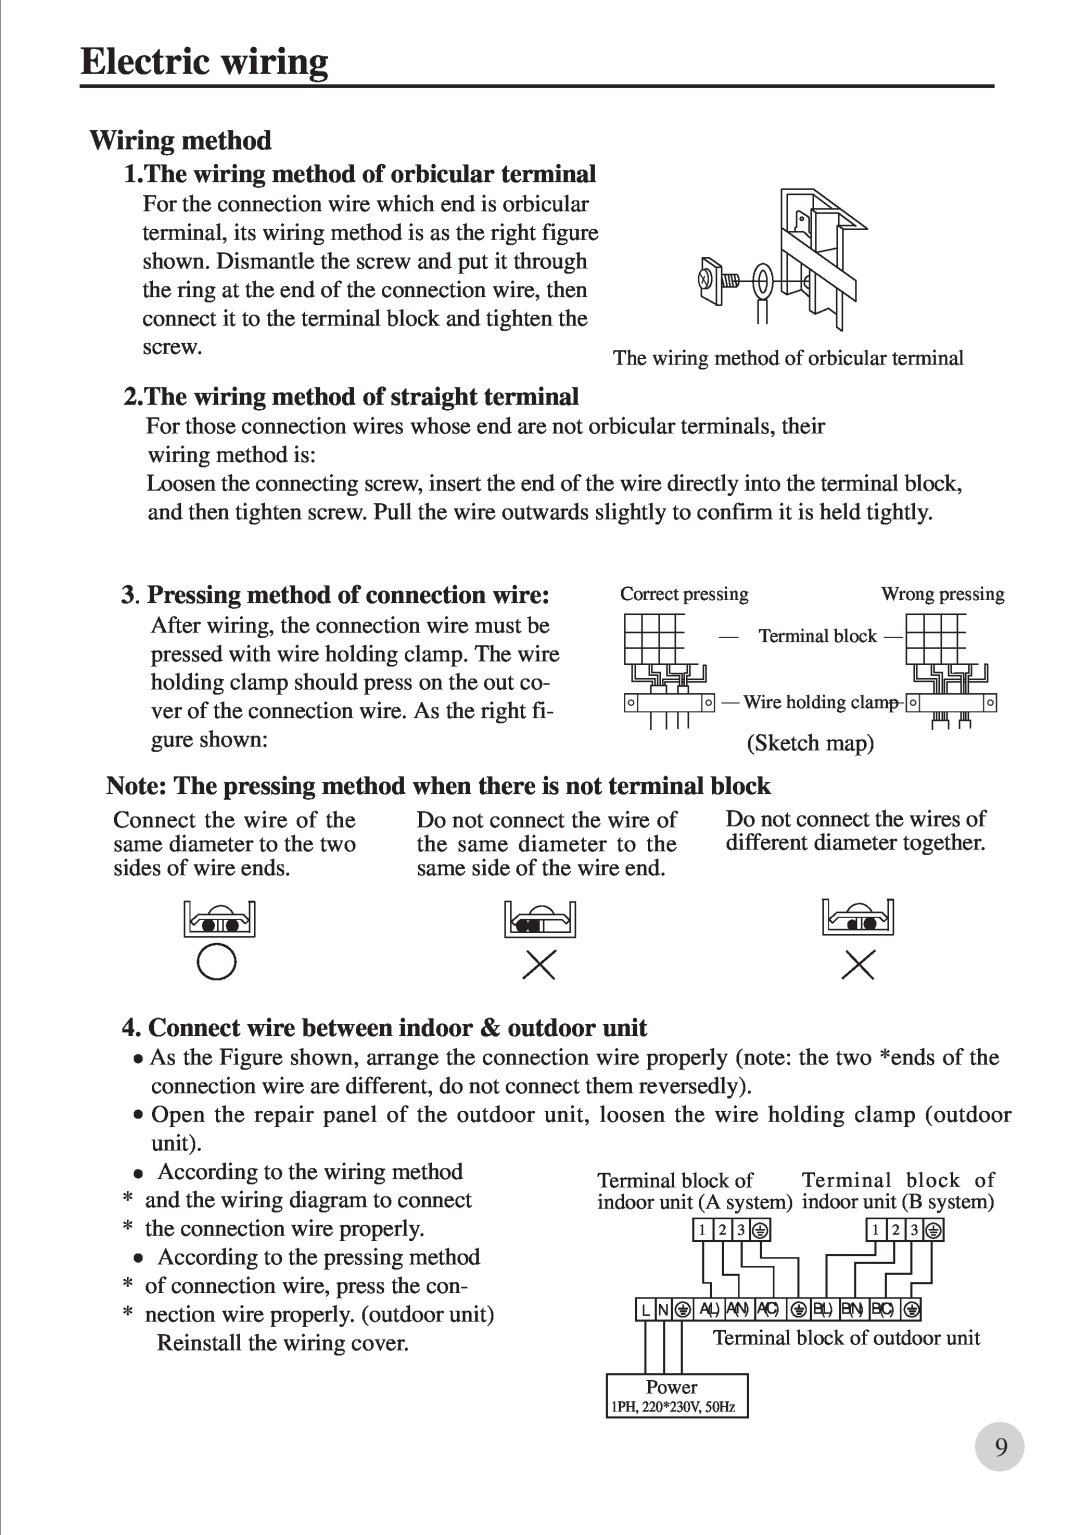 Haier 0010571564, AU422BIBAA operation manual Electric wiring, Wiring method, The wiring method of orbicular terminal 